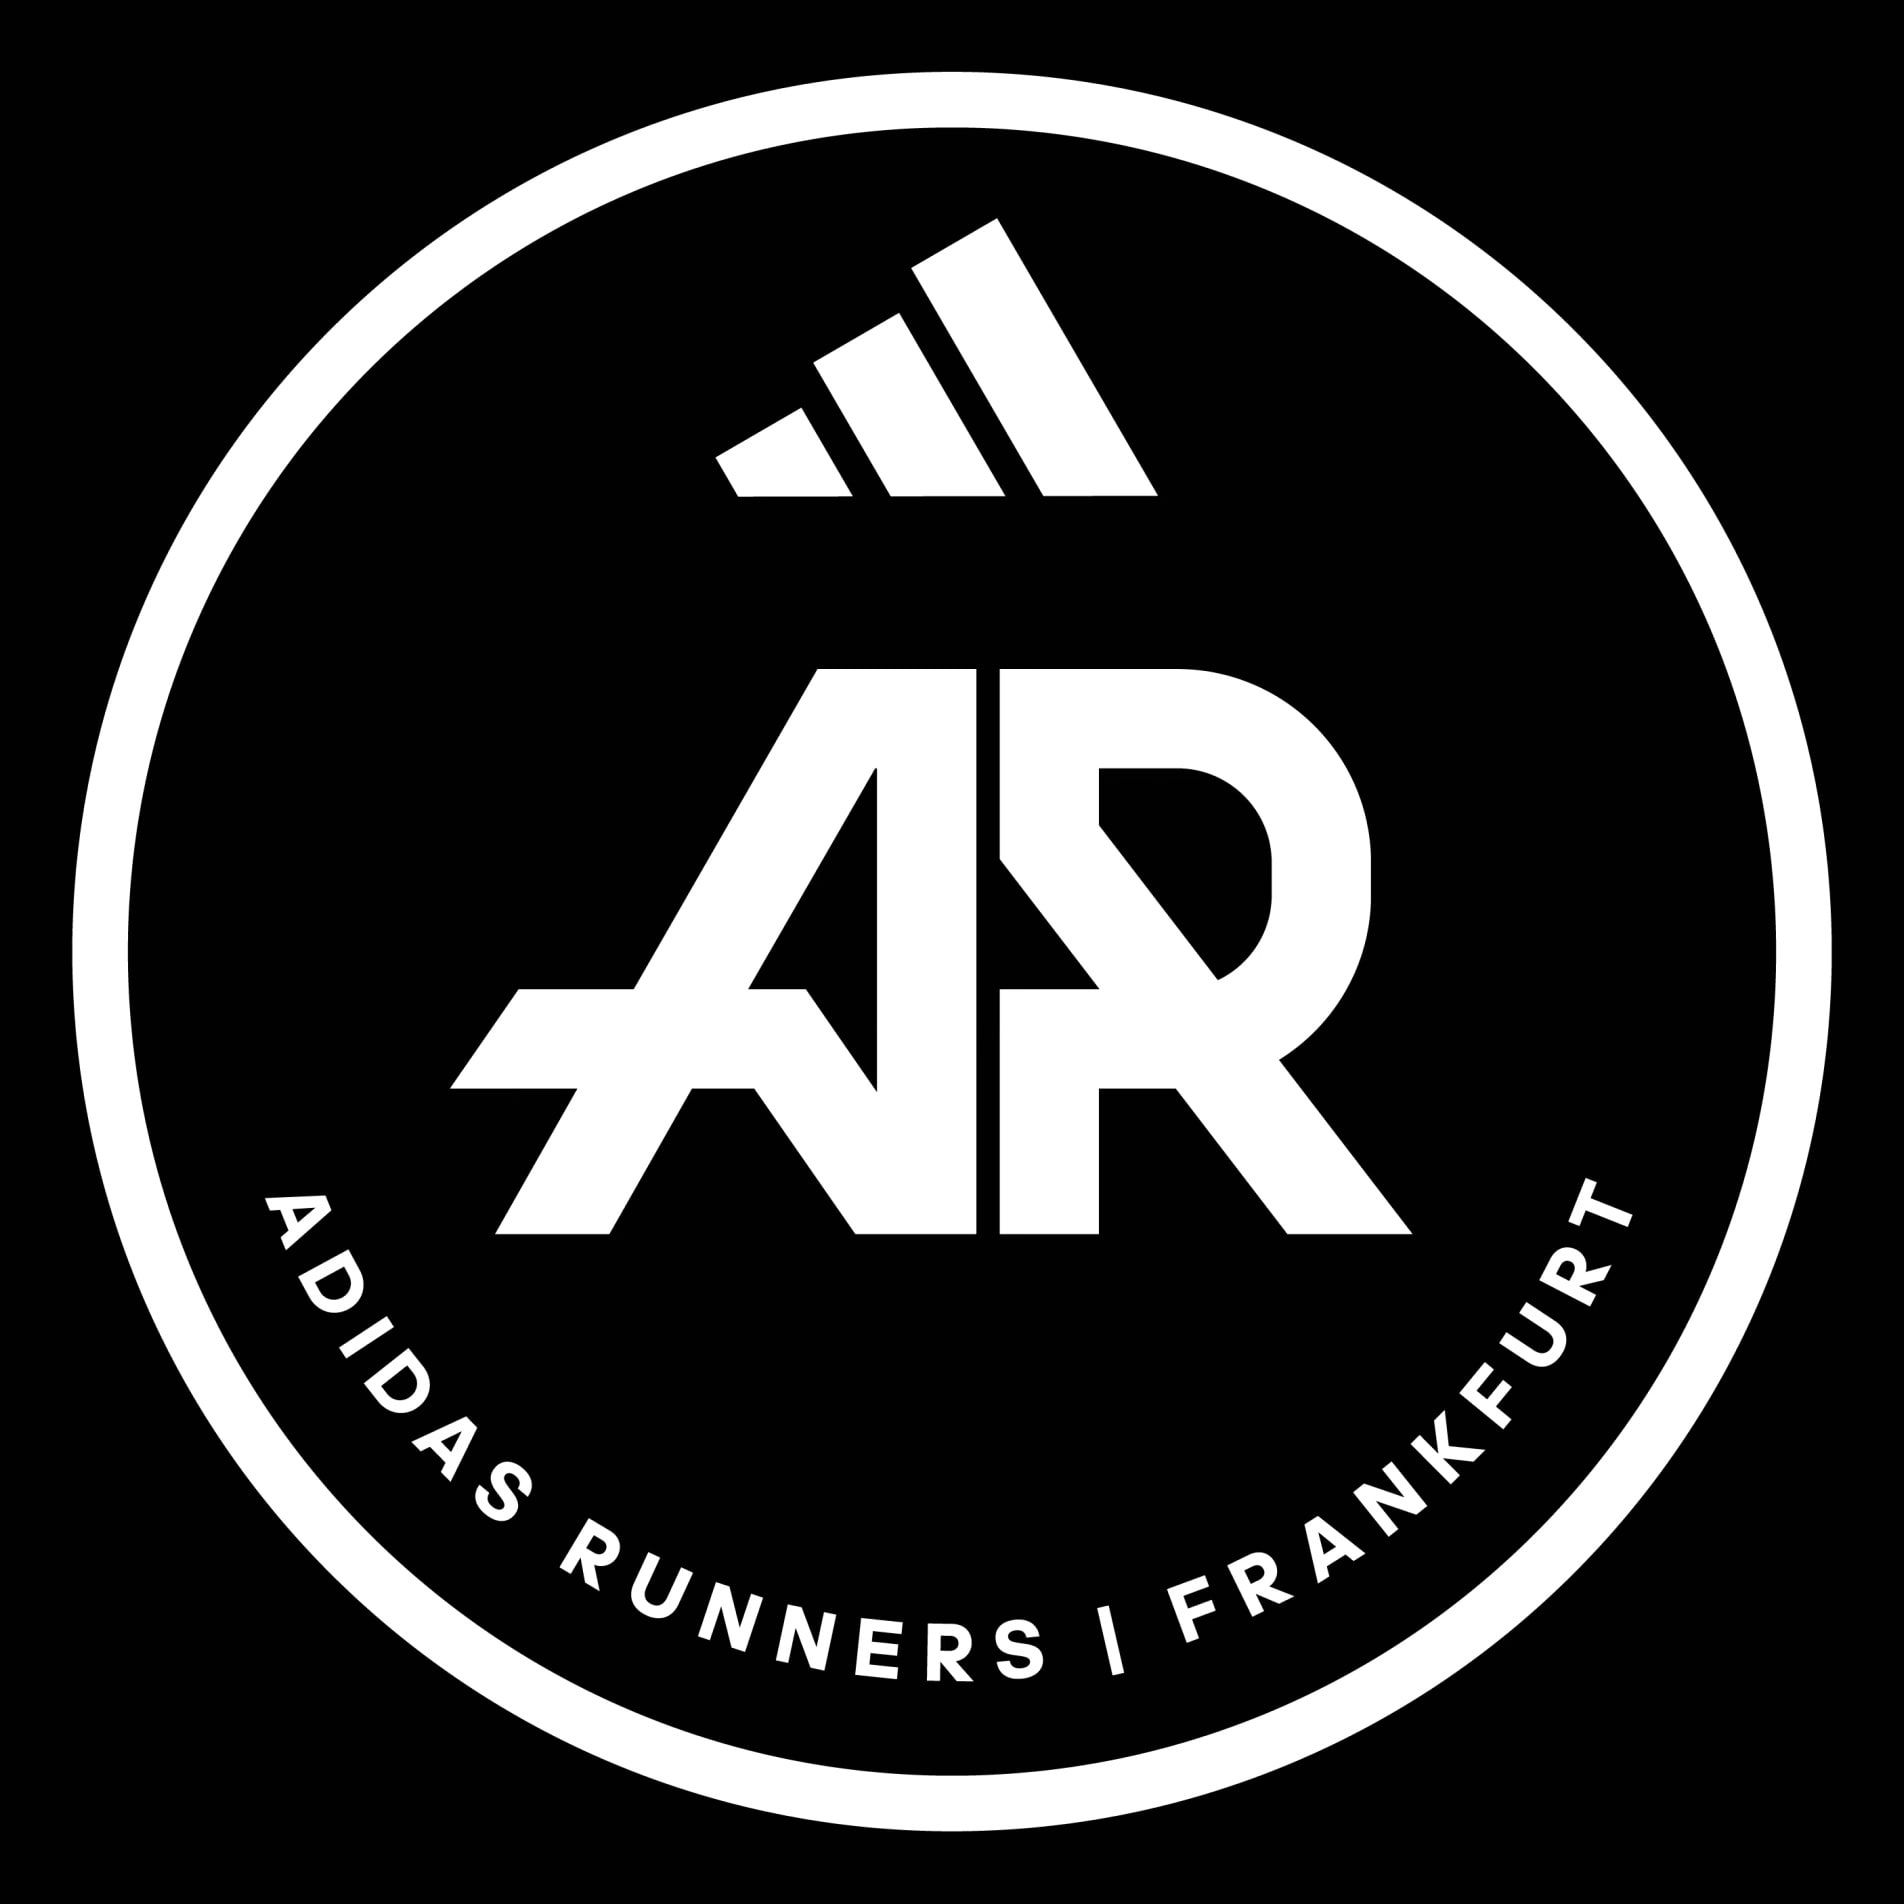 Runners Frankfurt